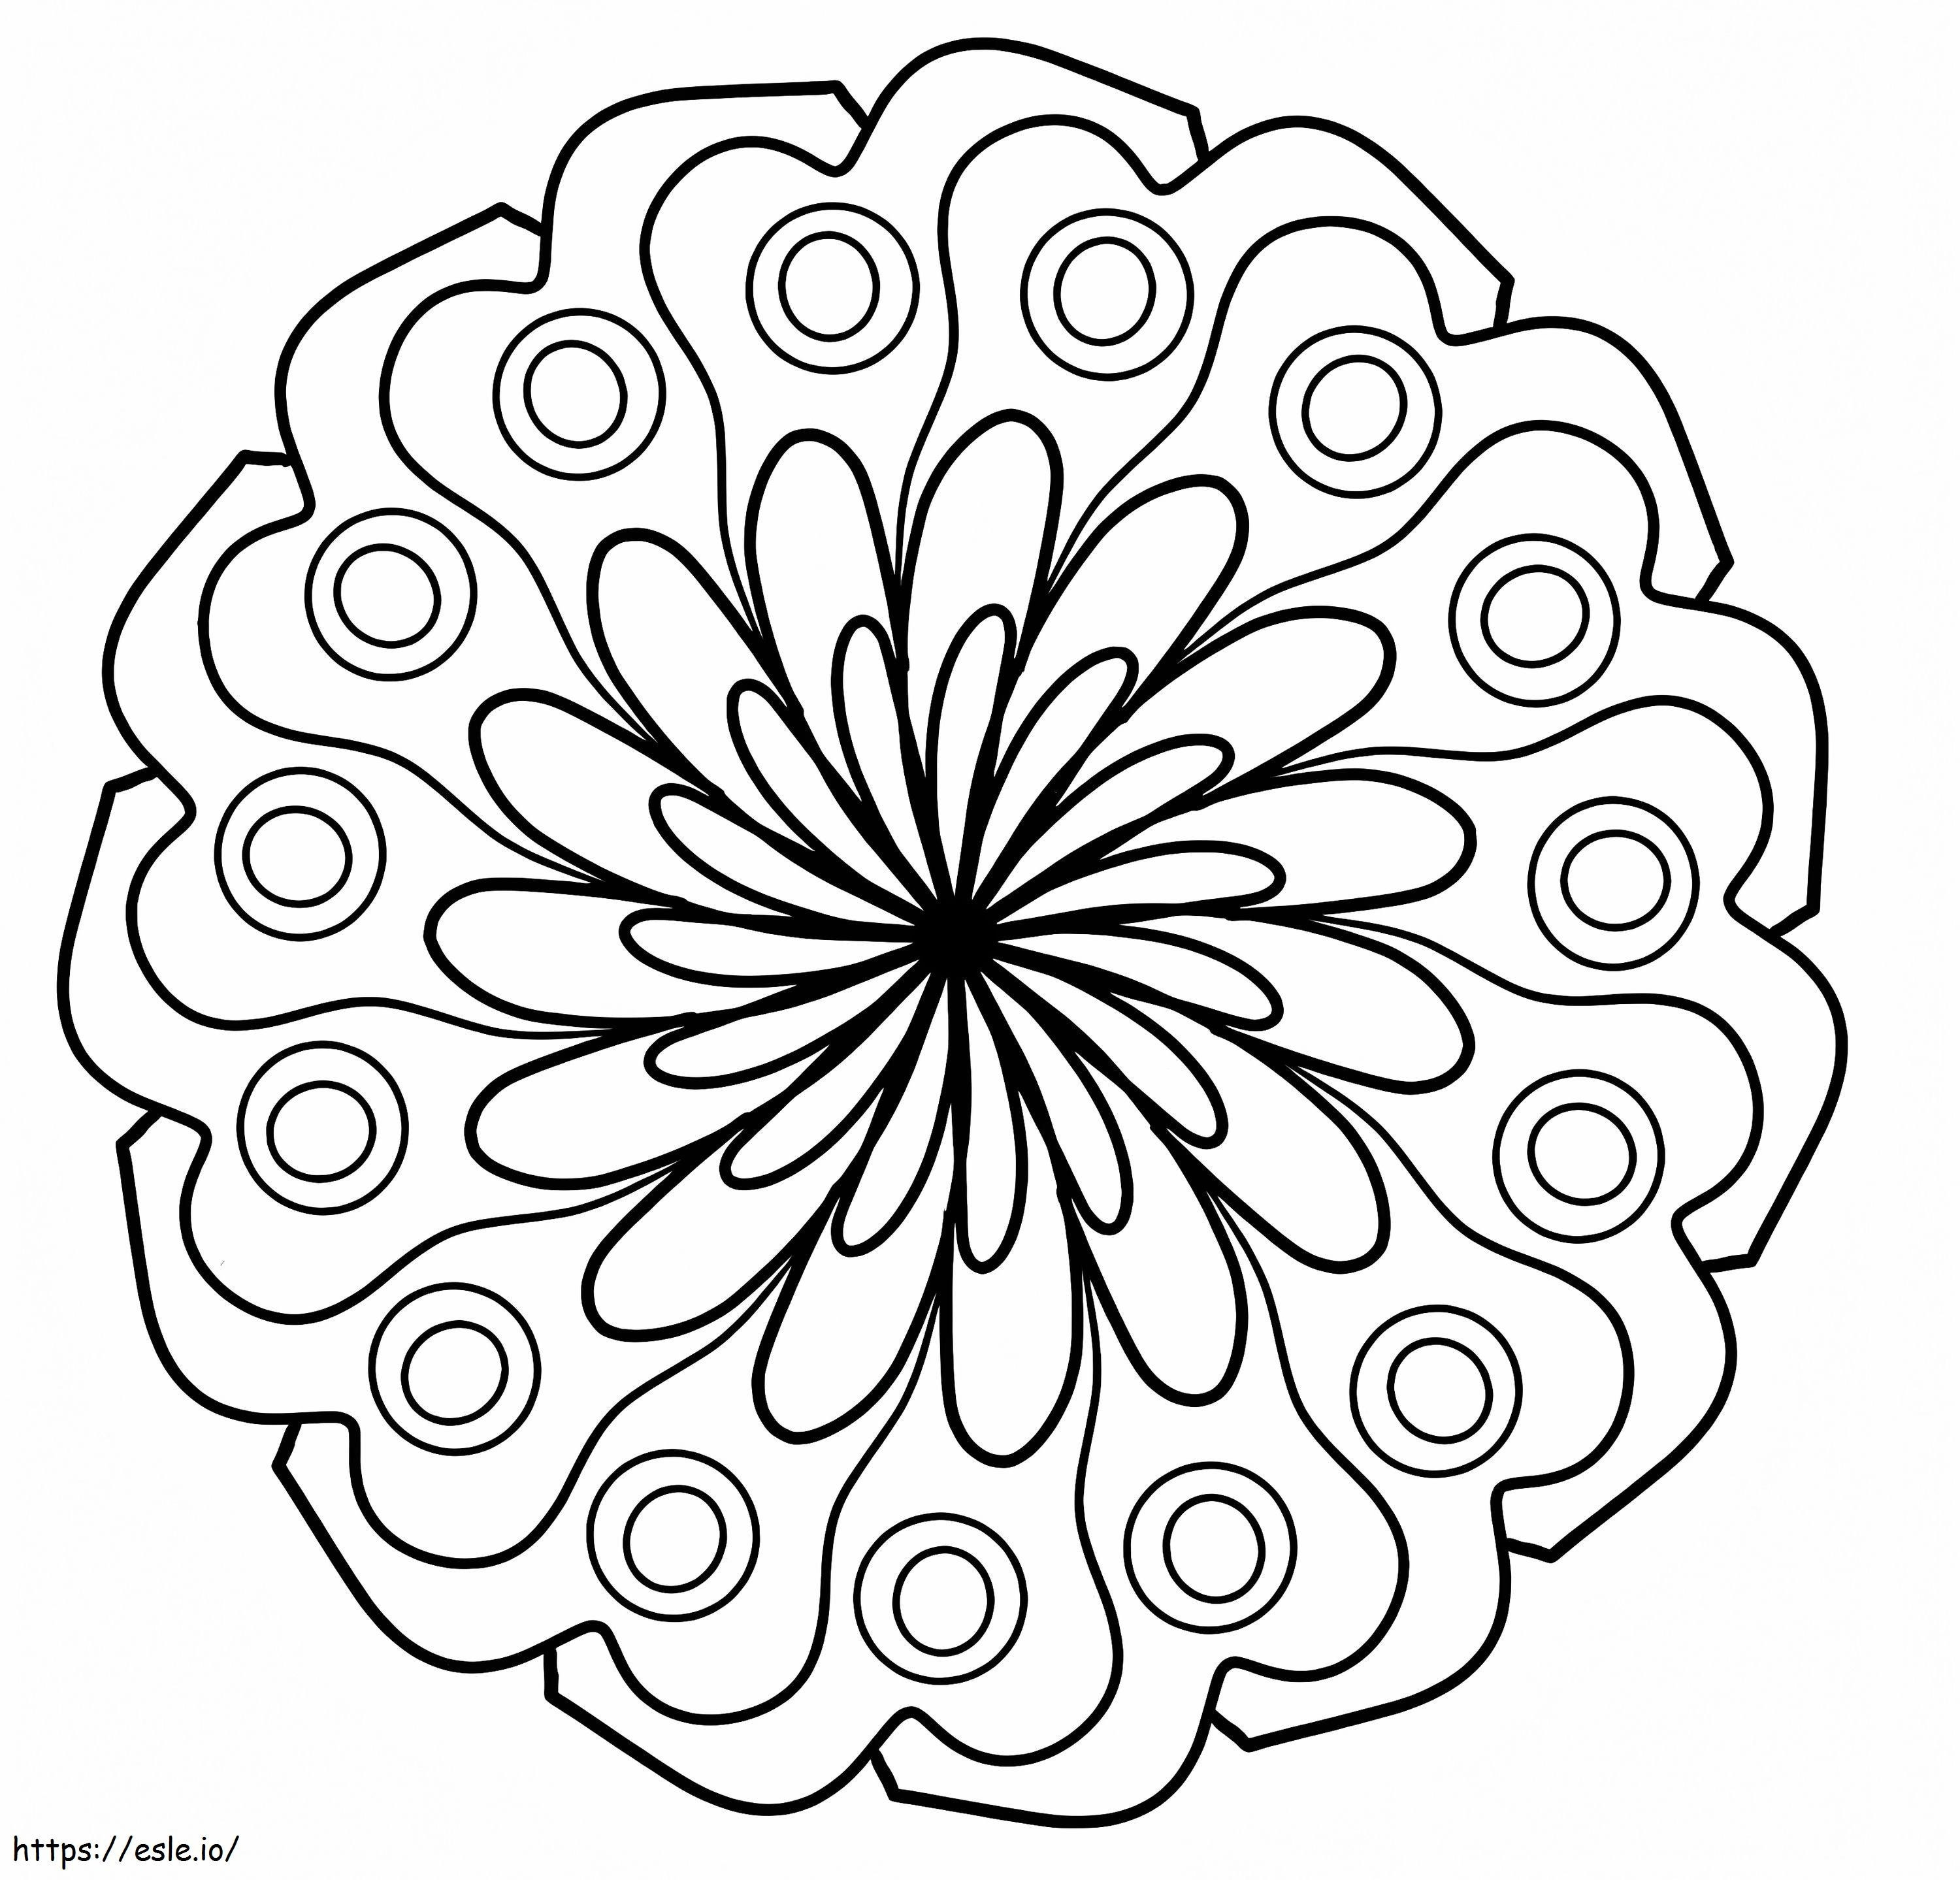 Mandala de flores simples para colorir